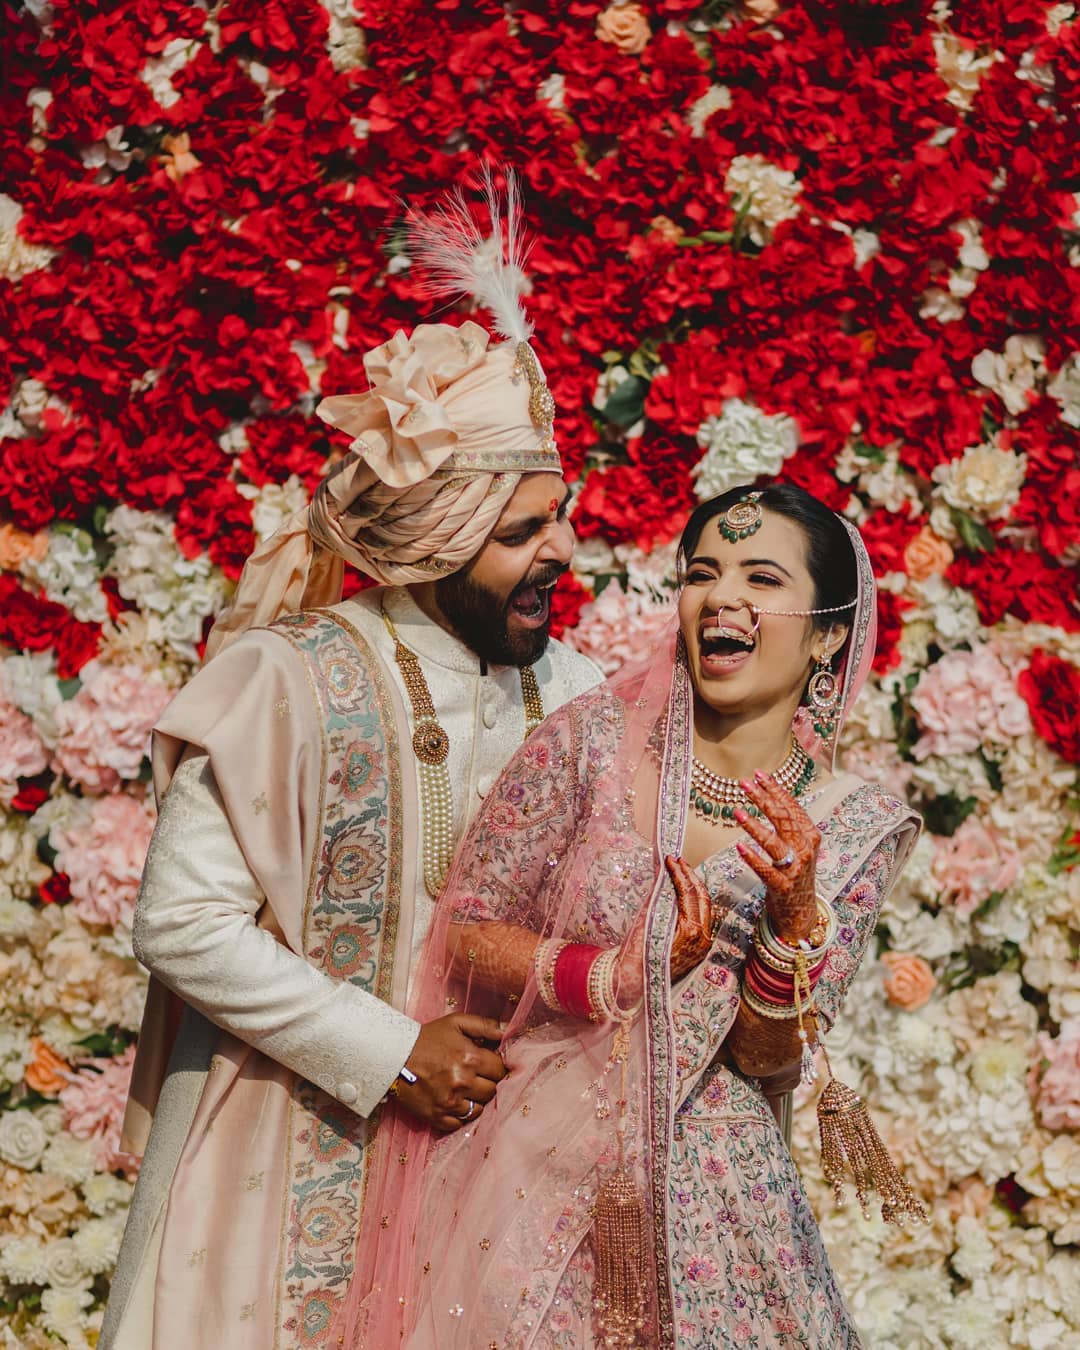 Hindu Wedding Photography Poses  Beautiful Poses For A Hindu Bride